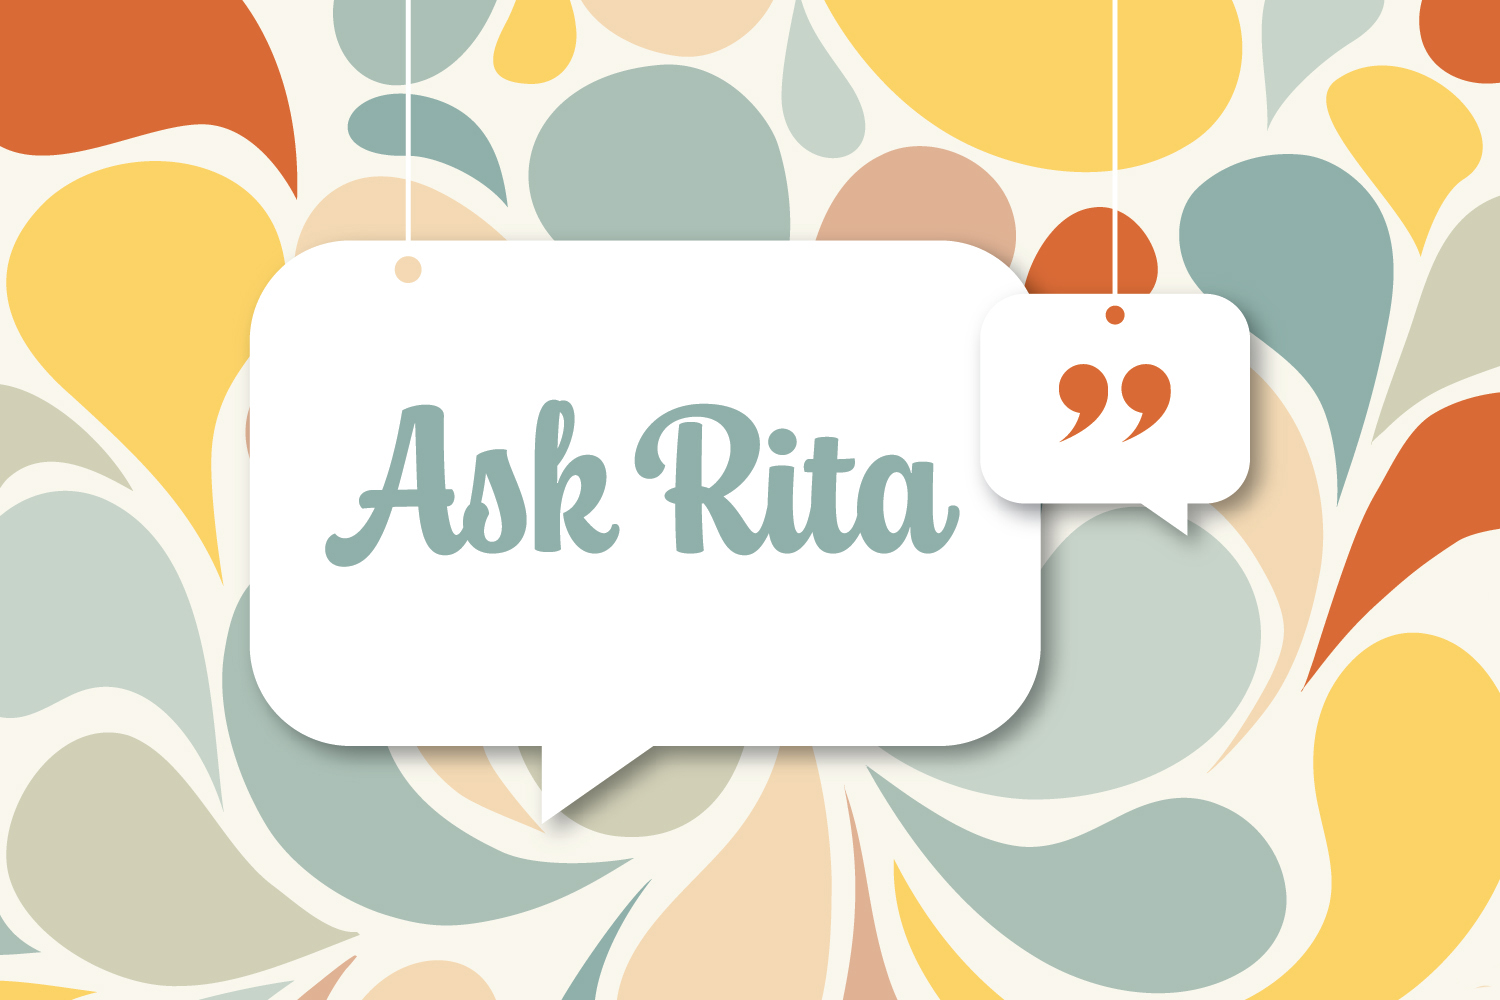 Ask Rita: Do Nonprofits Need Insurance for Volunteers?